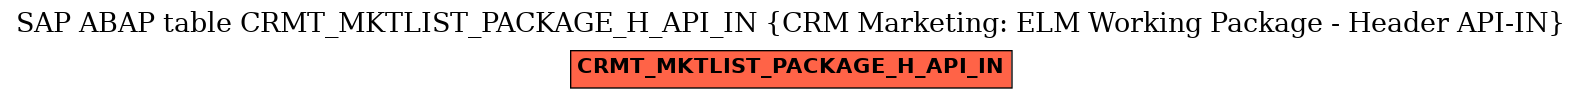 E-R Diagram for table CRMT_MKTLIST_PACKAGE_H_API_IN (CRM Marketing: ELM Working Package - Header API-IN)